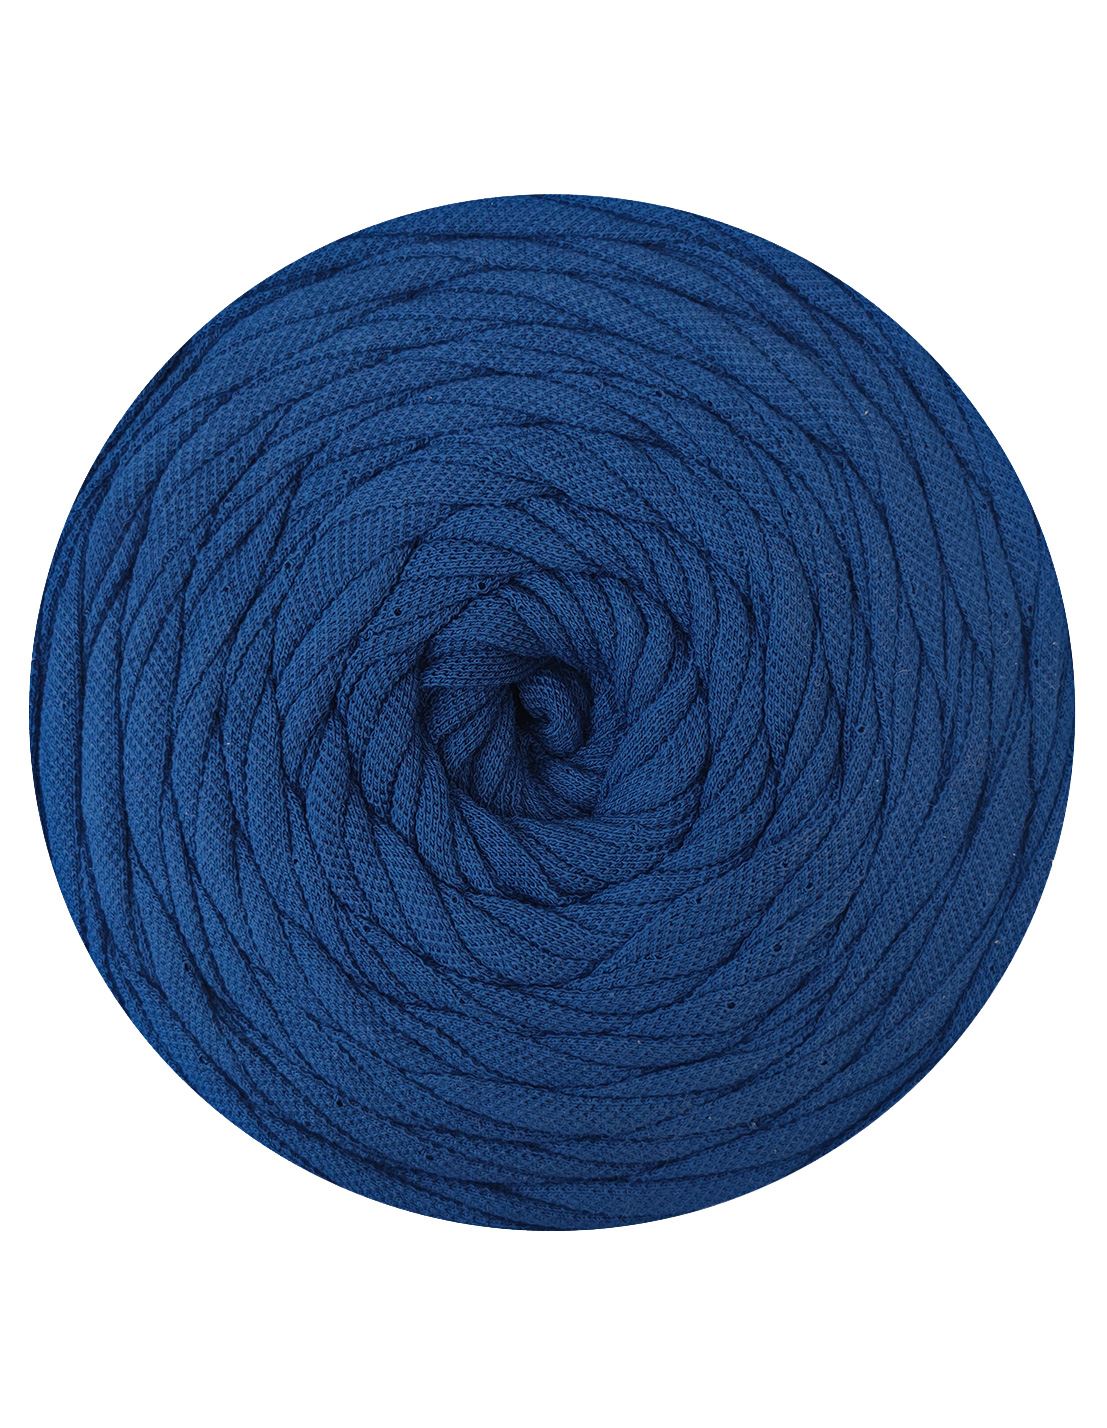 Blue polo t-shirt yarn (100-120m)